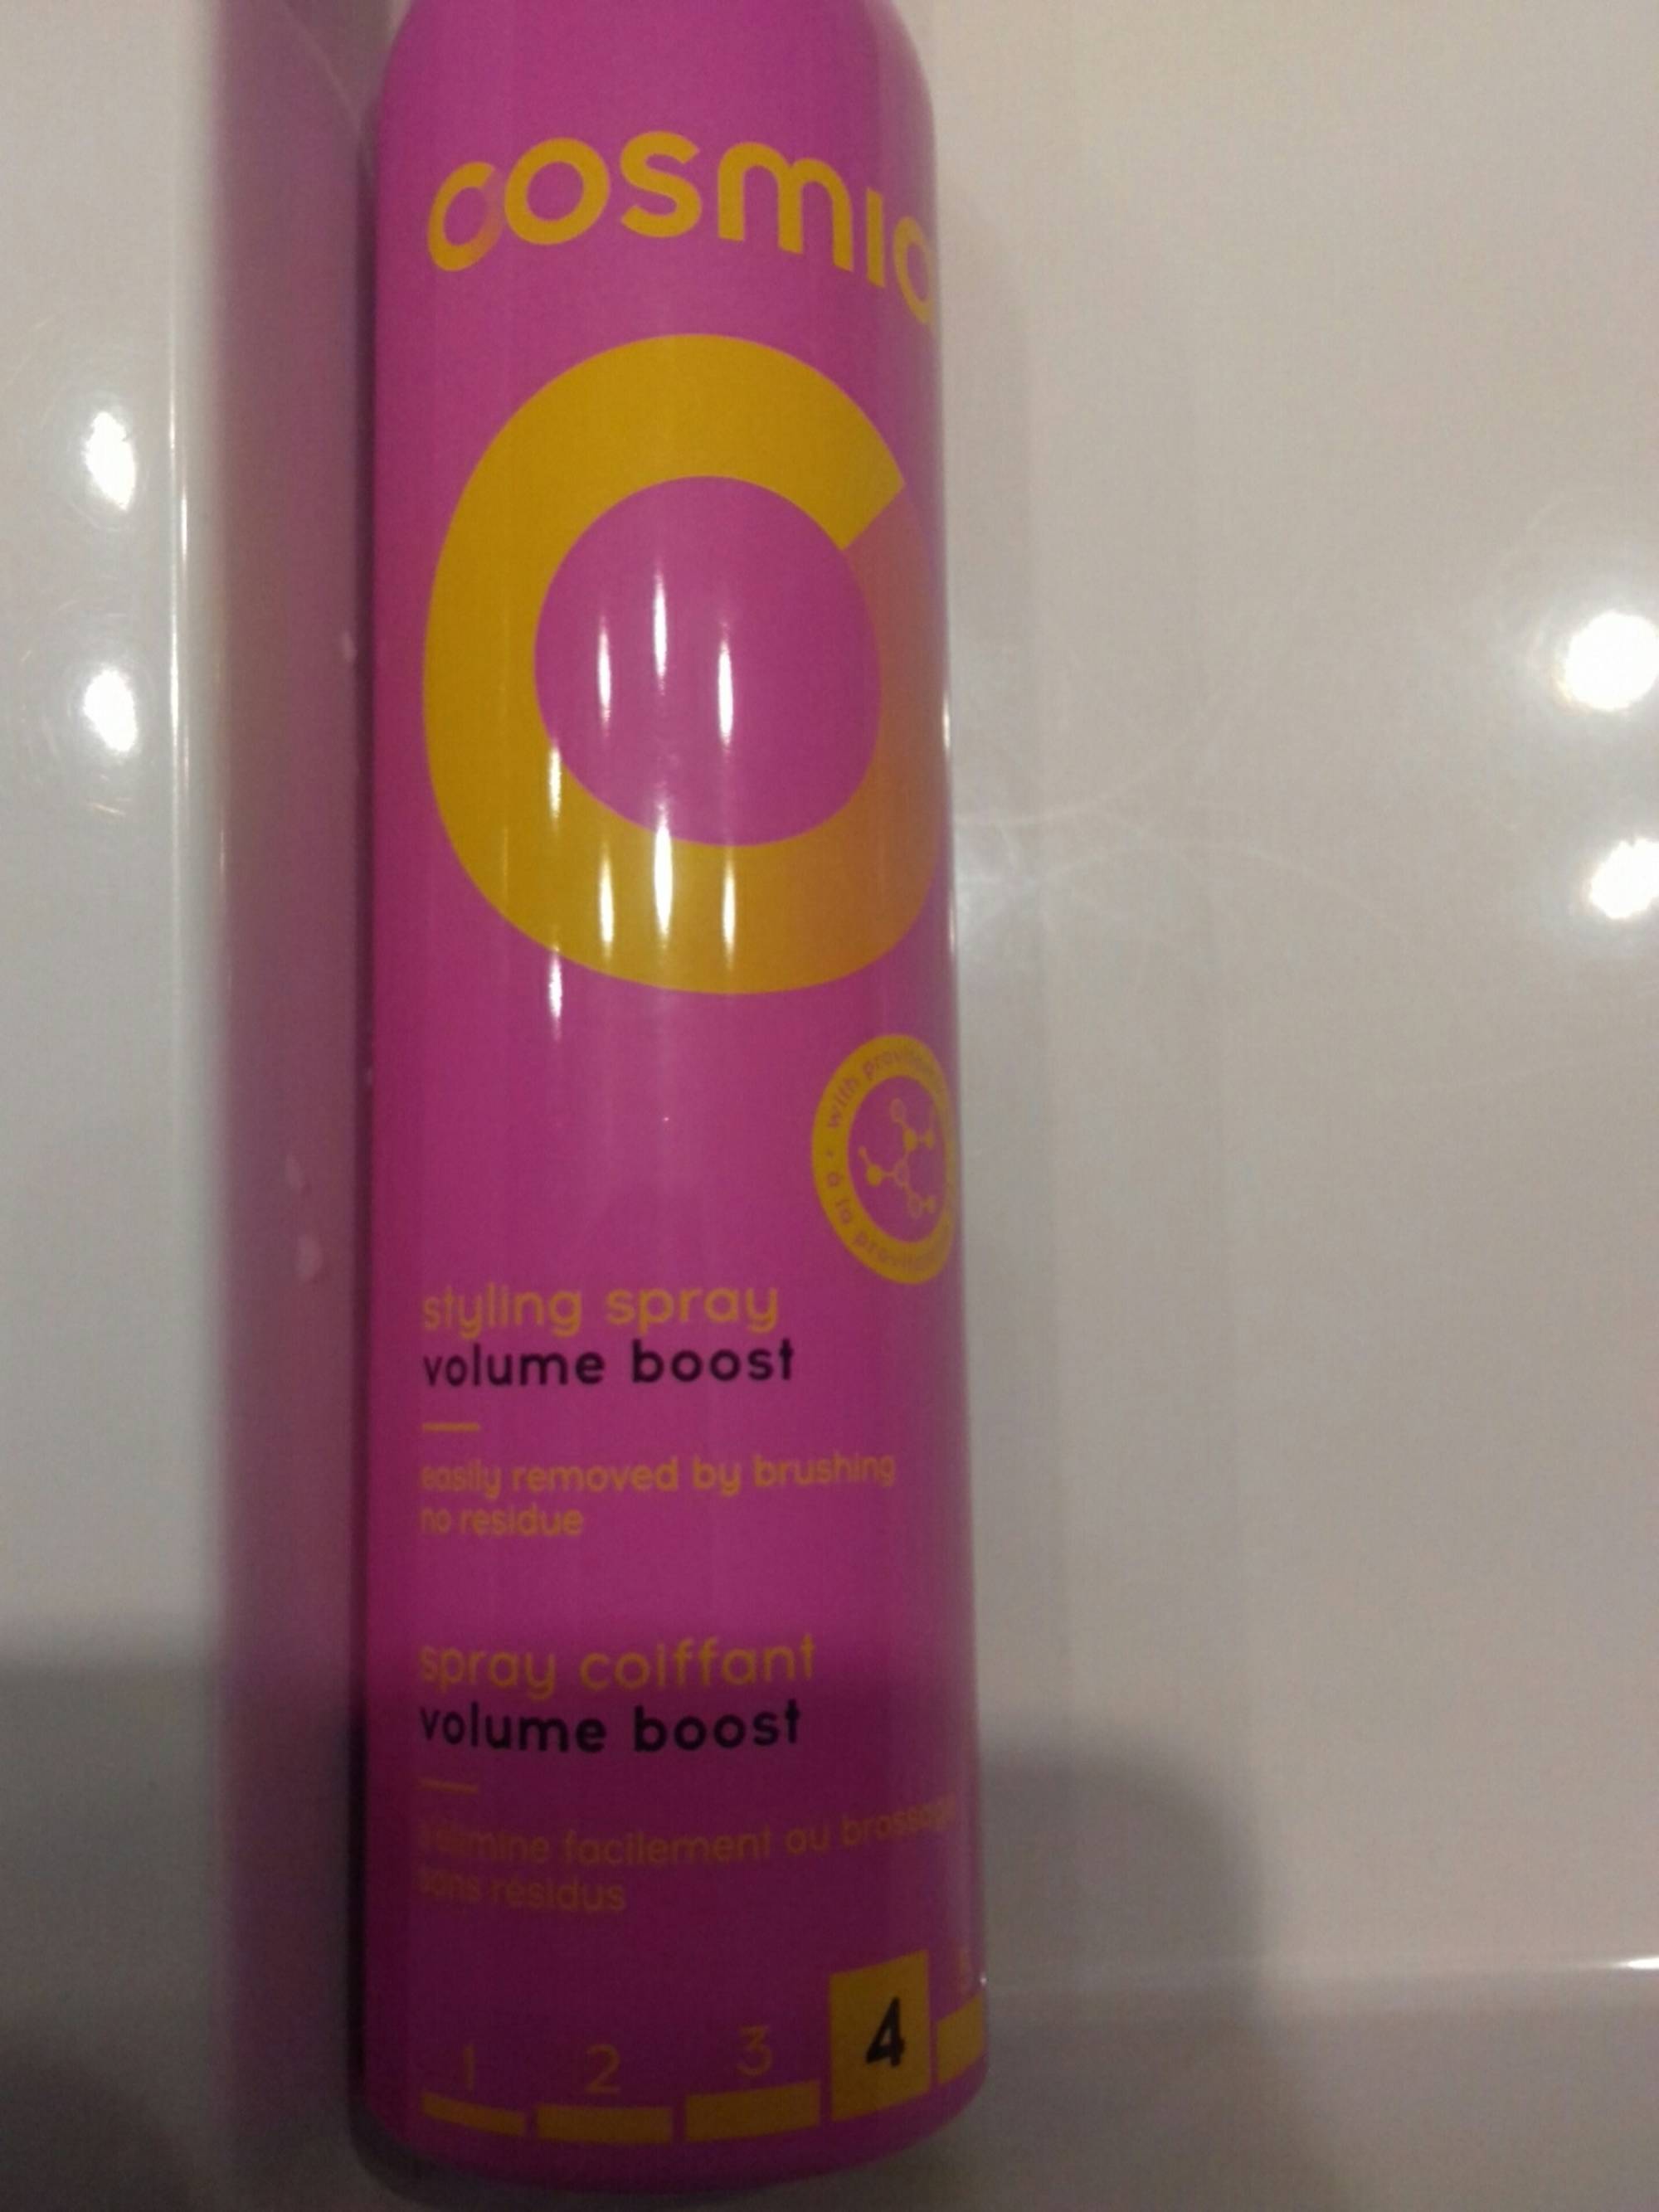 COSMIA - Spray coiffant volume boost